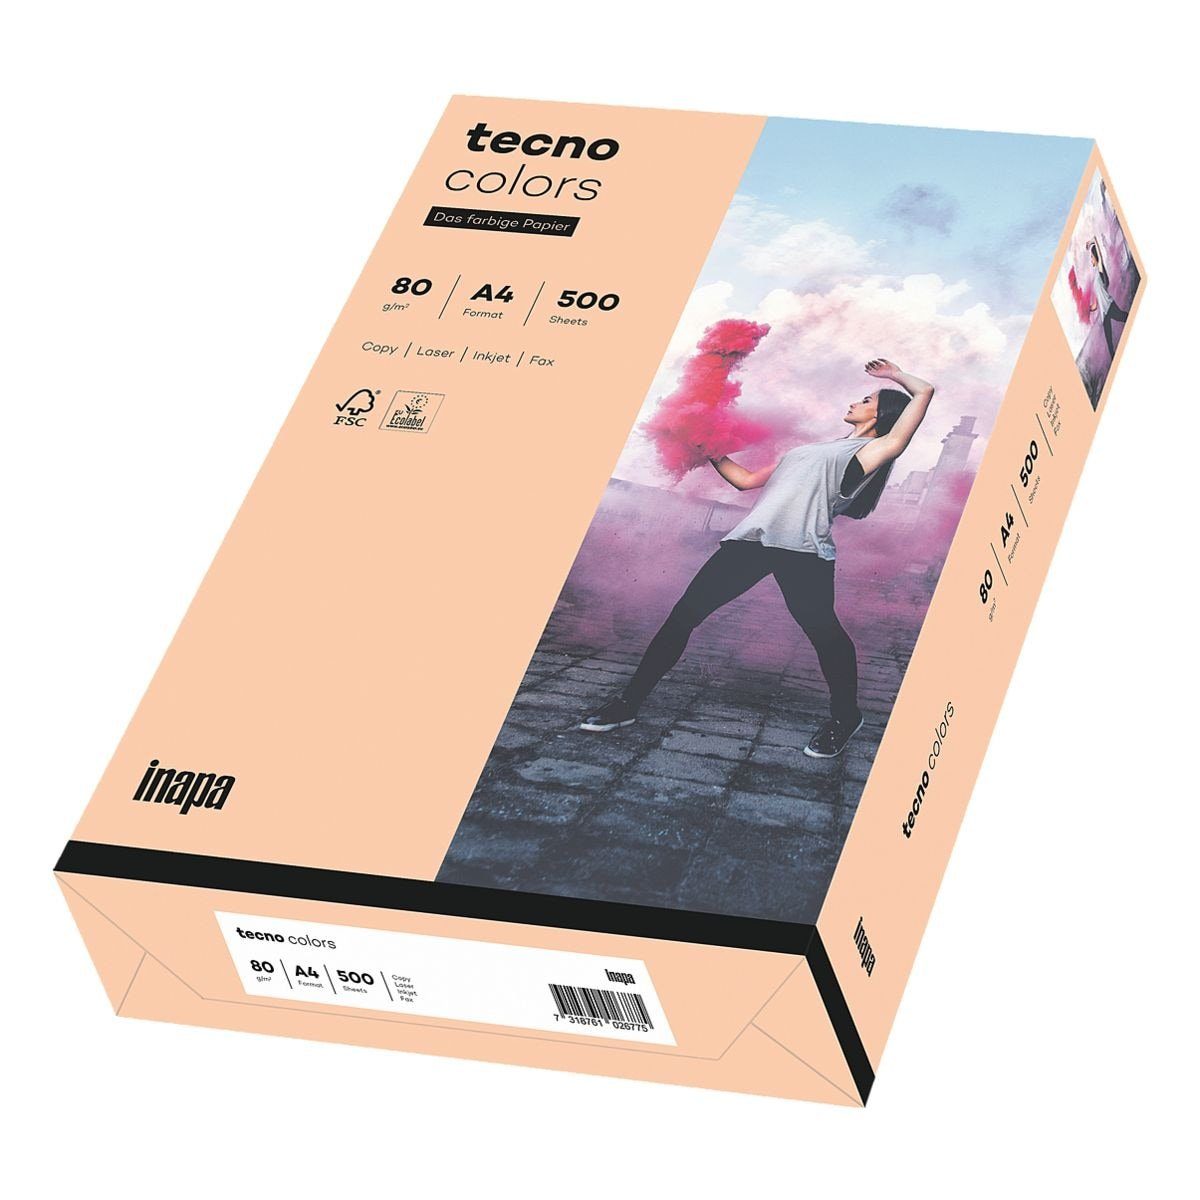 tecno lachs Rainbow Pastellfarben, g/m², 500 A4, / Format tecno Kopierpapier Colors, Inapa Drucker- Blatt DIN 80 und